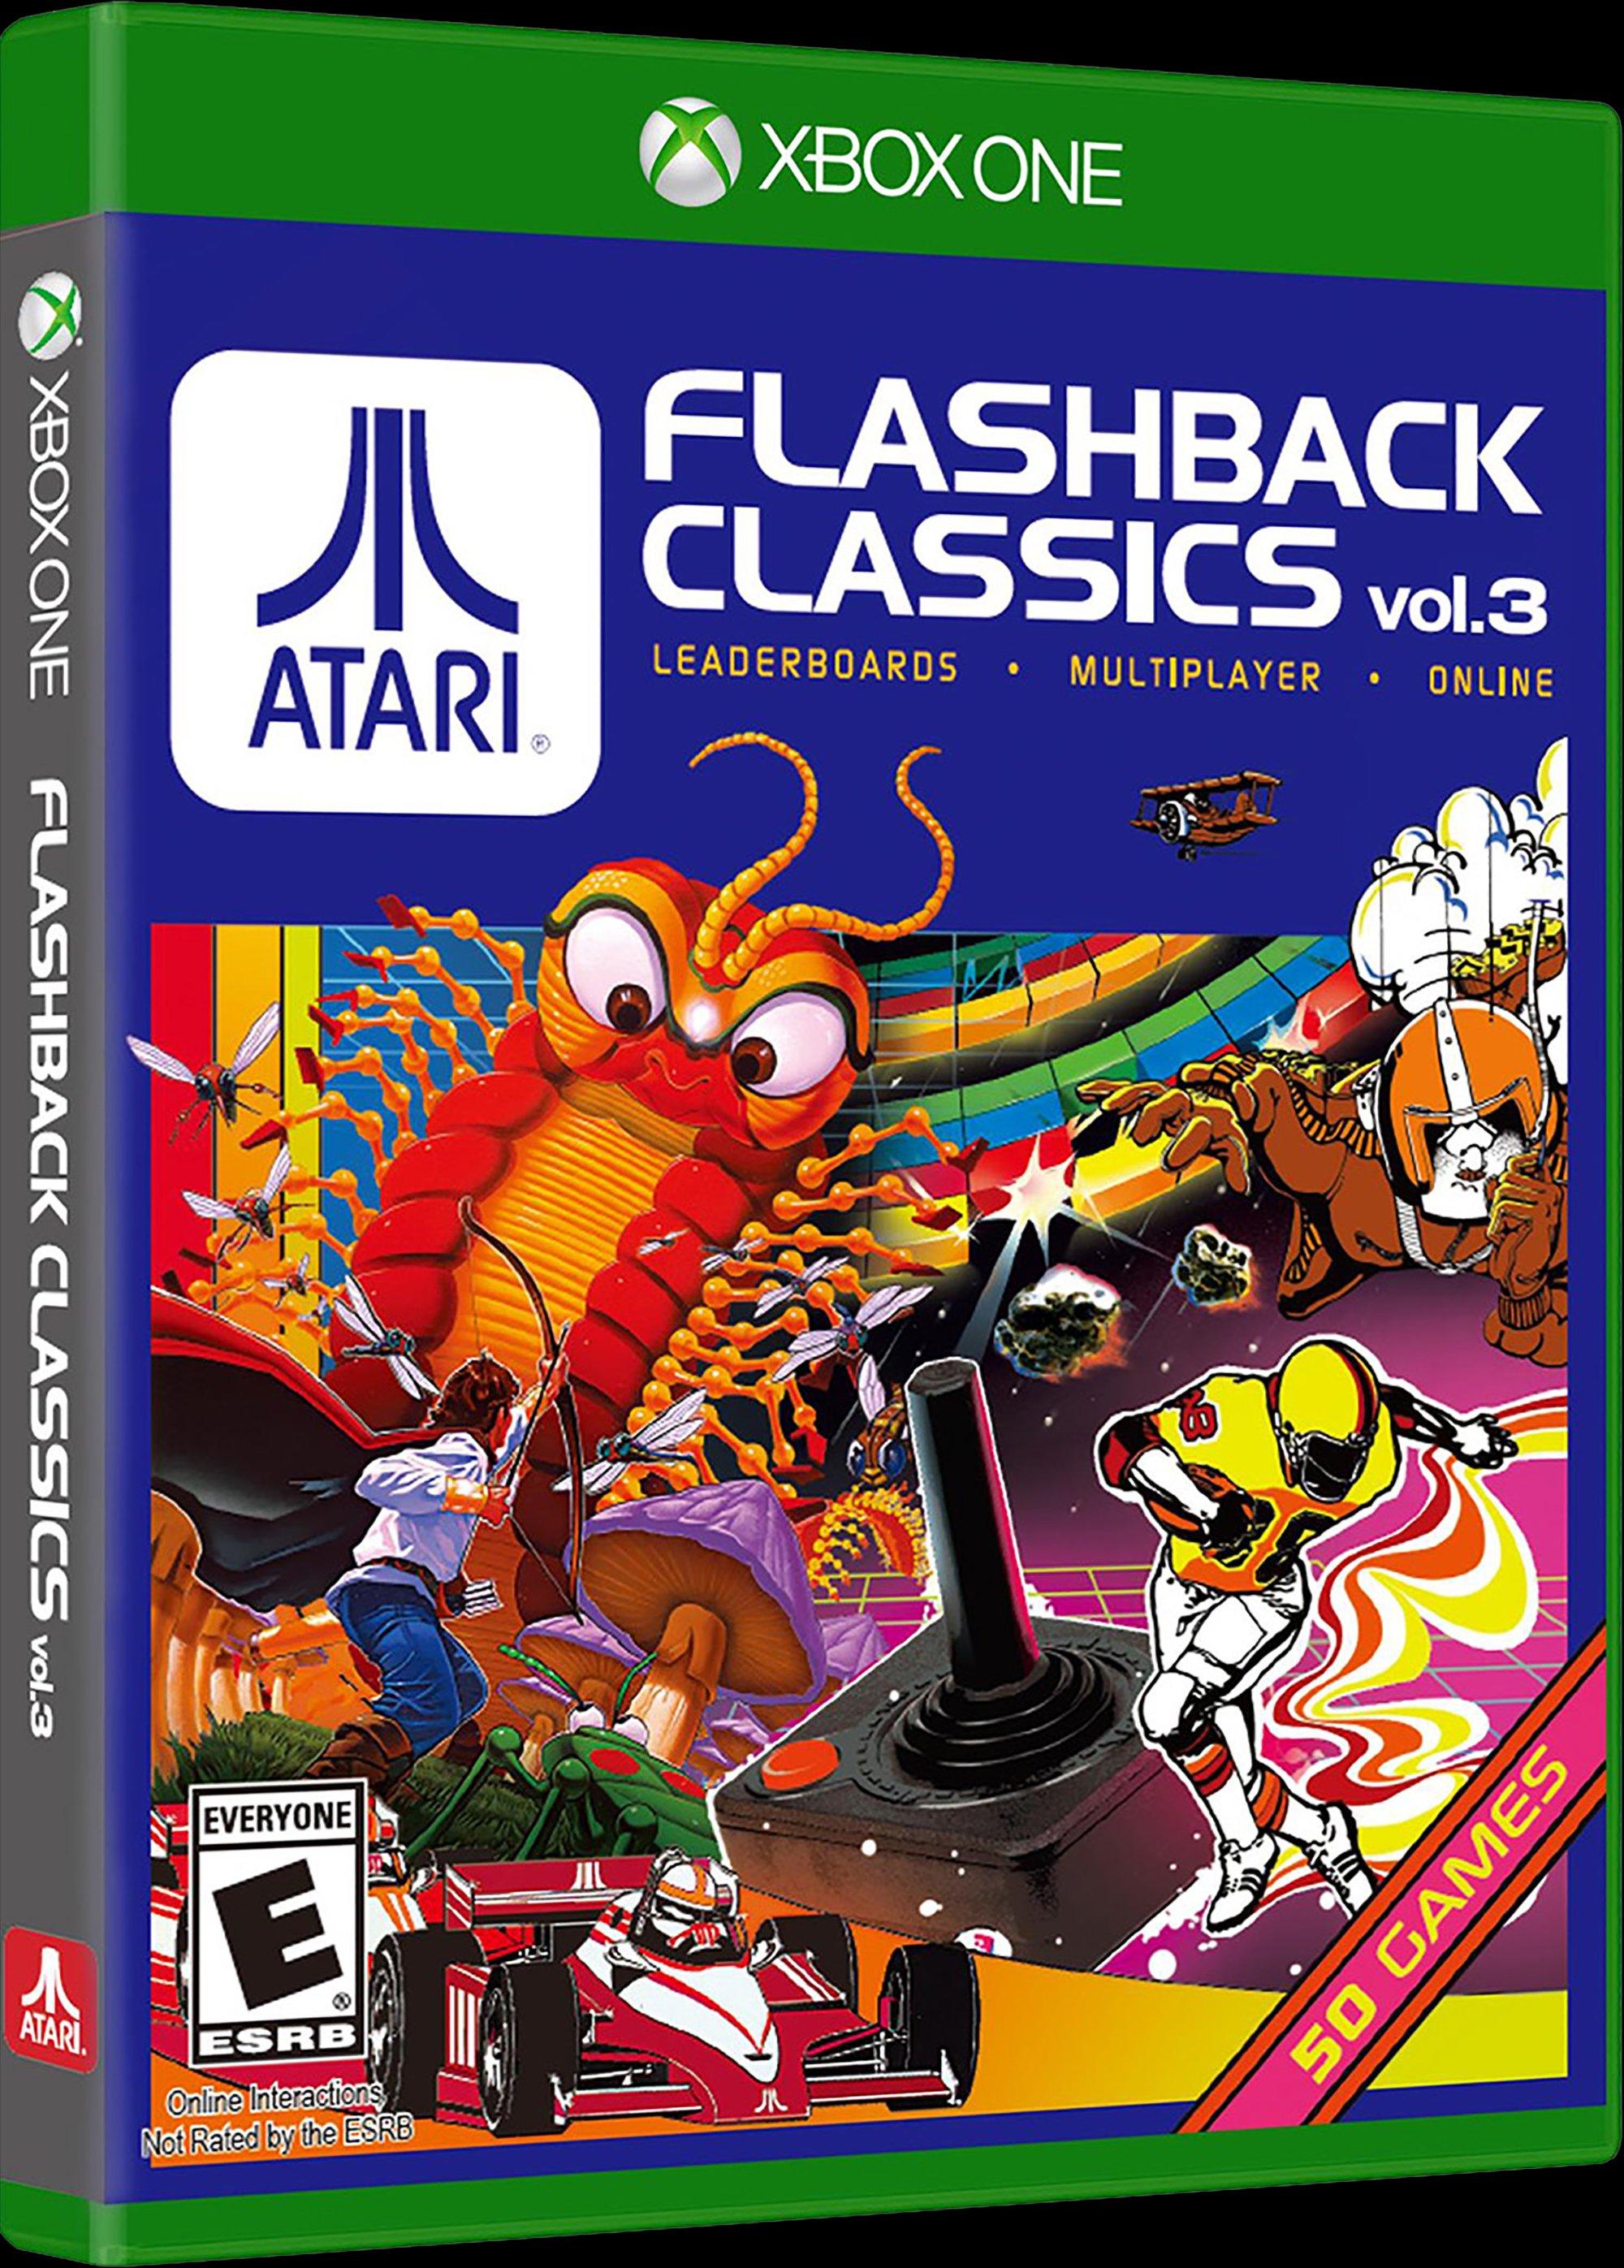 Doornen Pijnboom verrassing Atari Flashback Classics Volume 3 - Xbox One